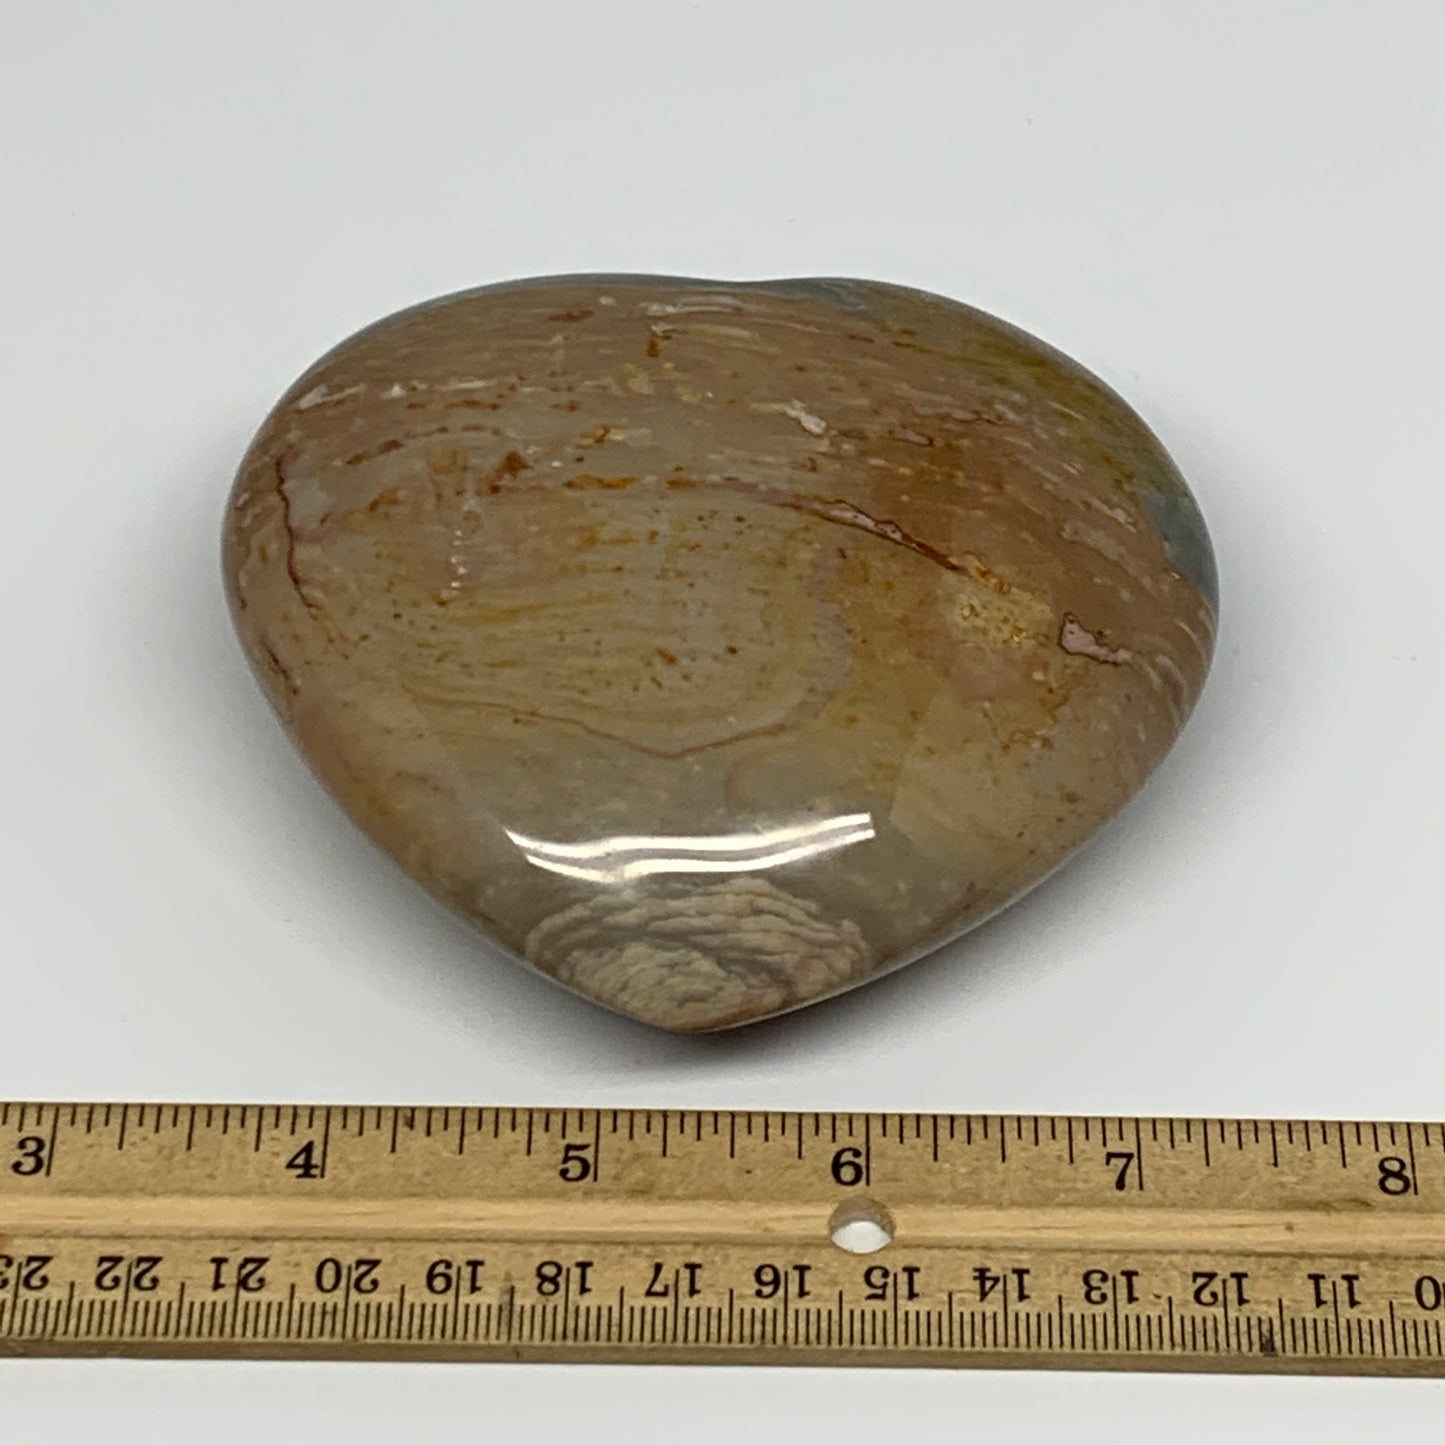 443.7g, 3.5"x3.9"x1.5" Polychrome Jasper Heart Polished Healing Crystal, B17718